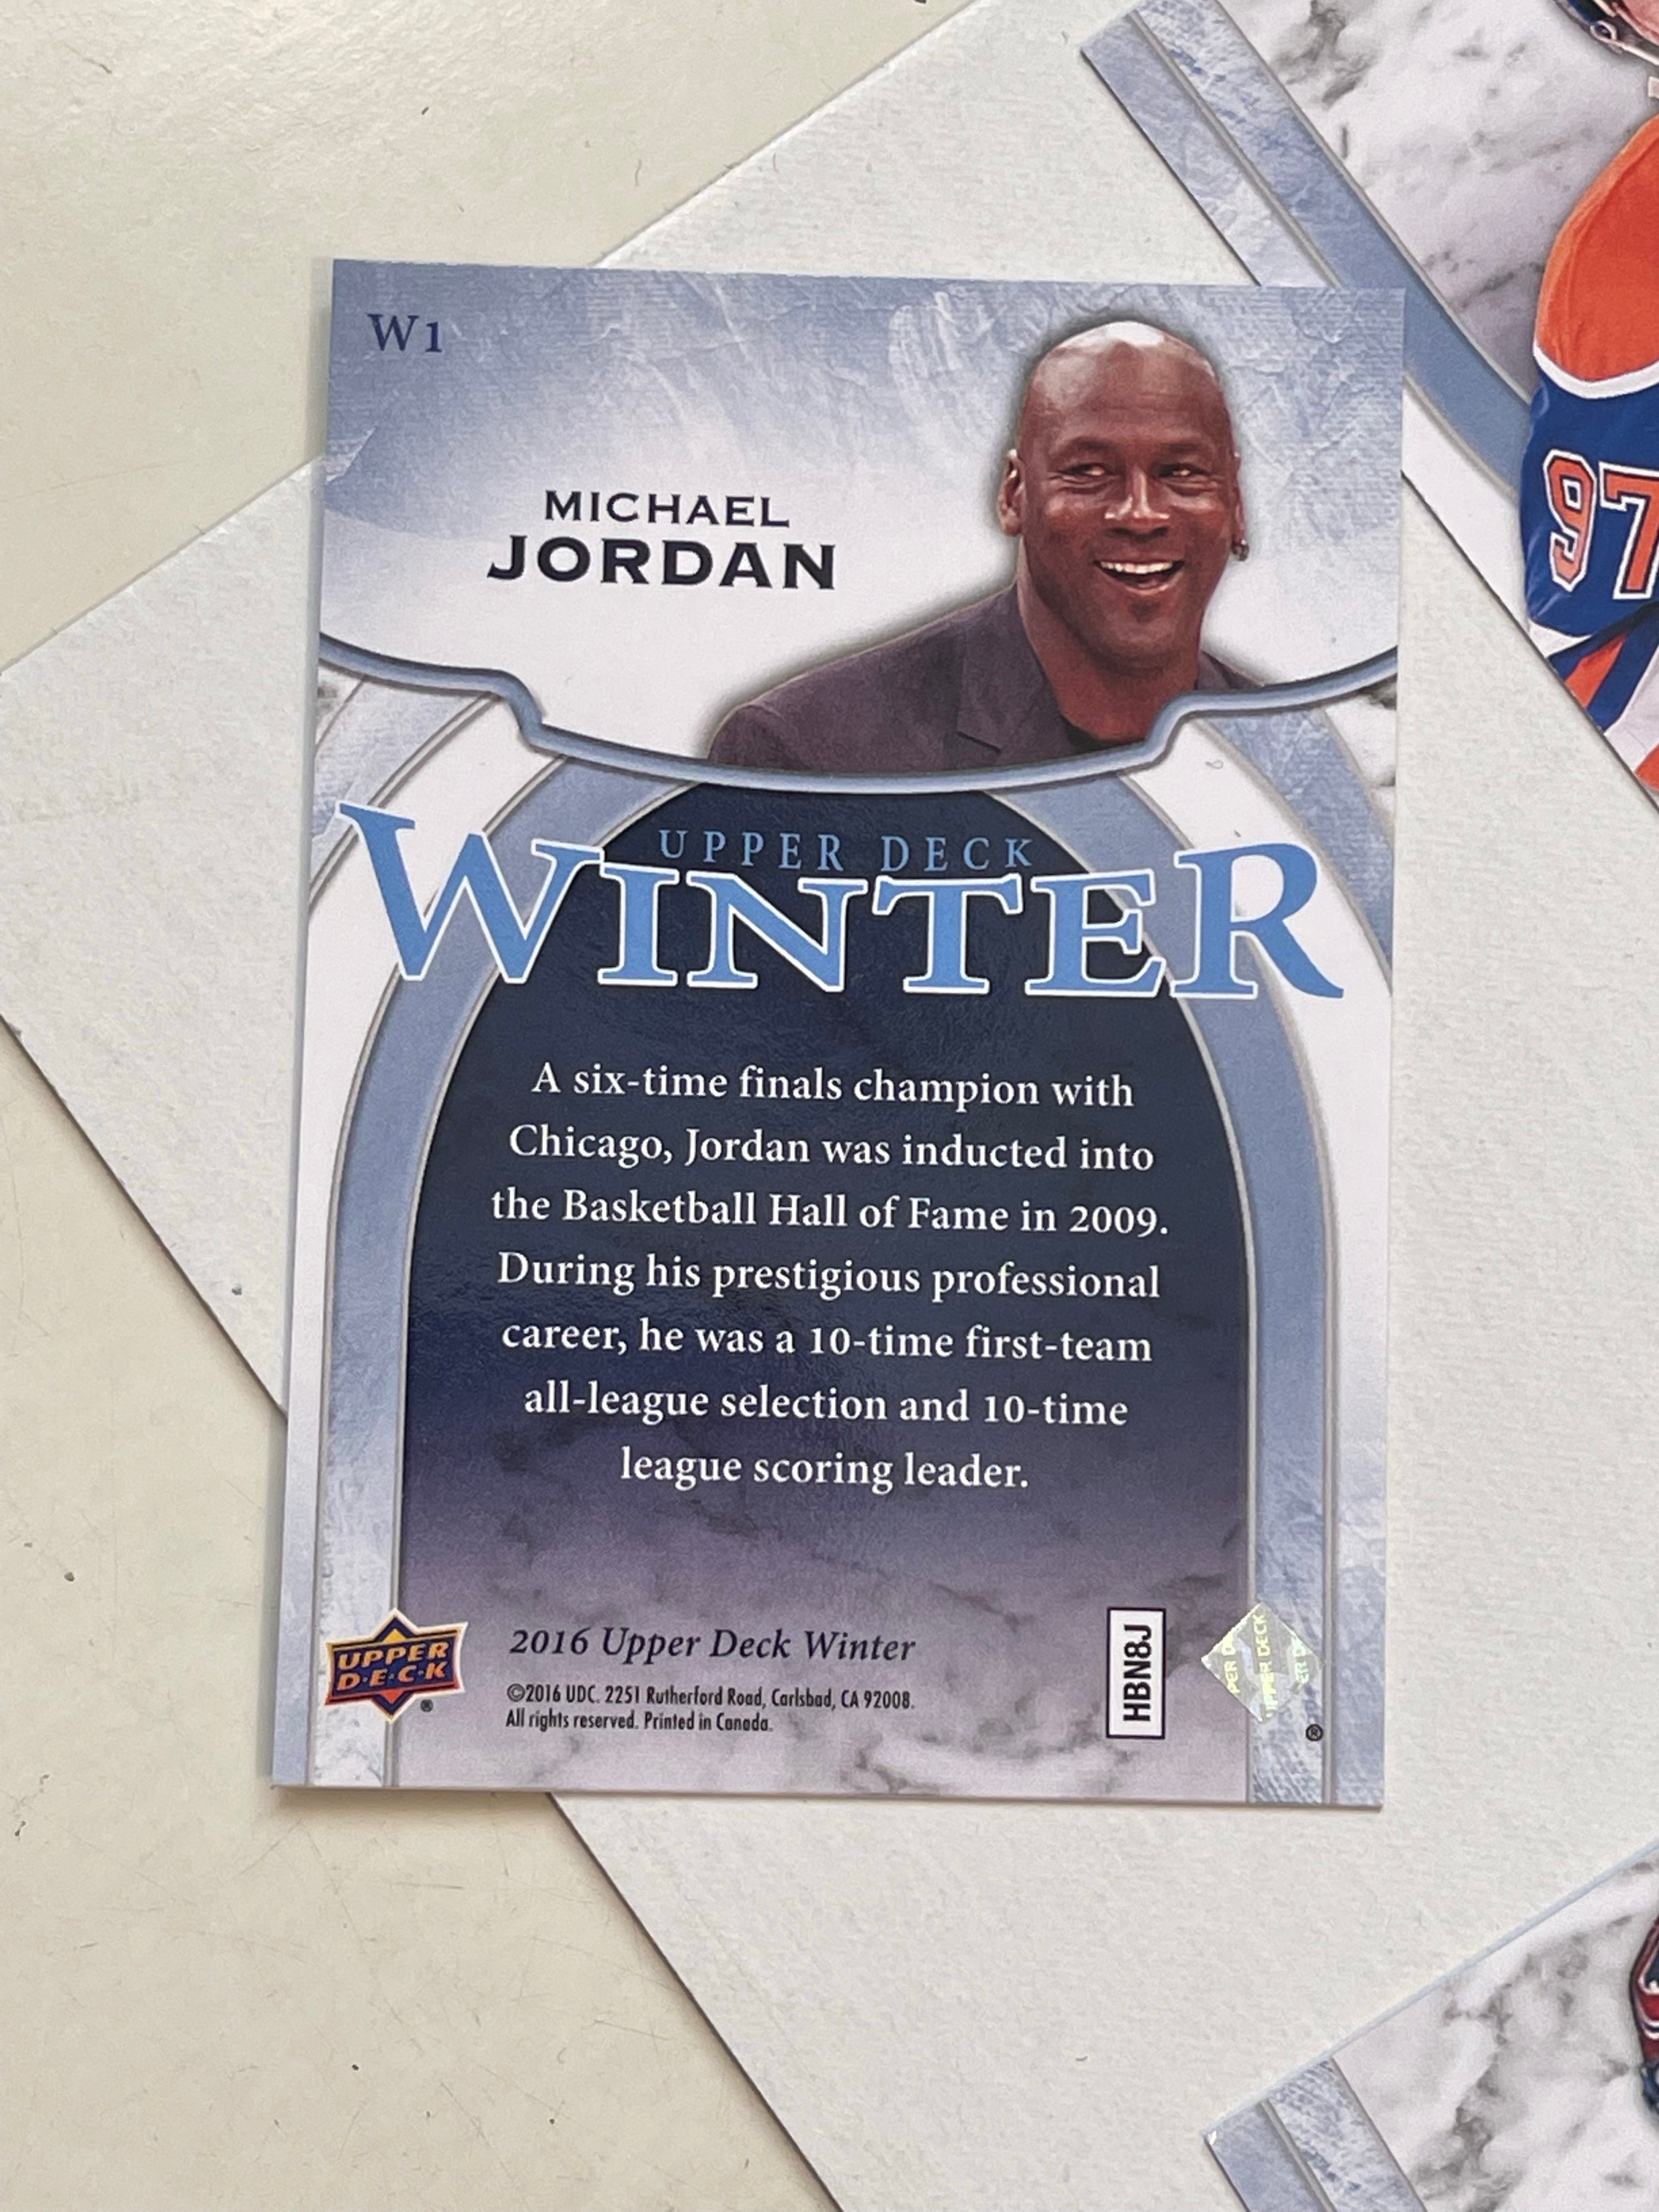 Upper Deck limited issue promo cards set: LeBron, Jordan,McDavid and more set